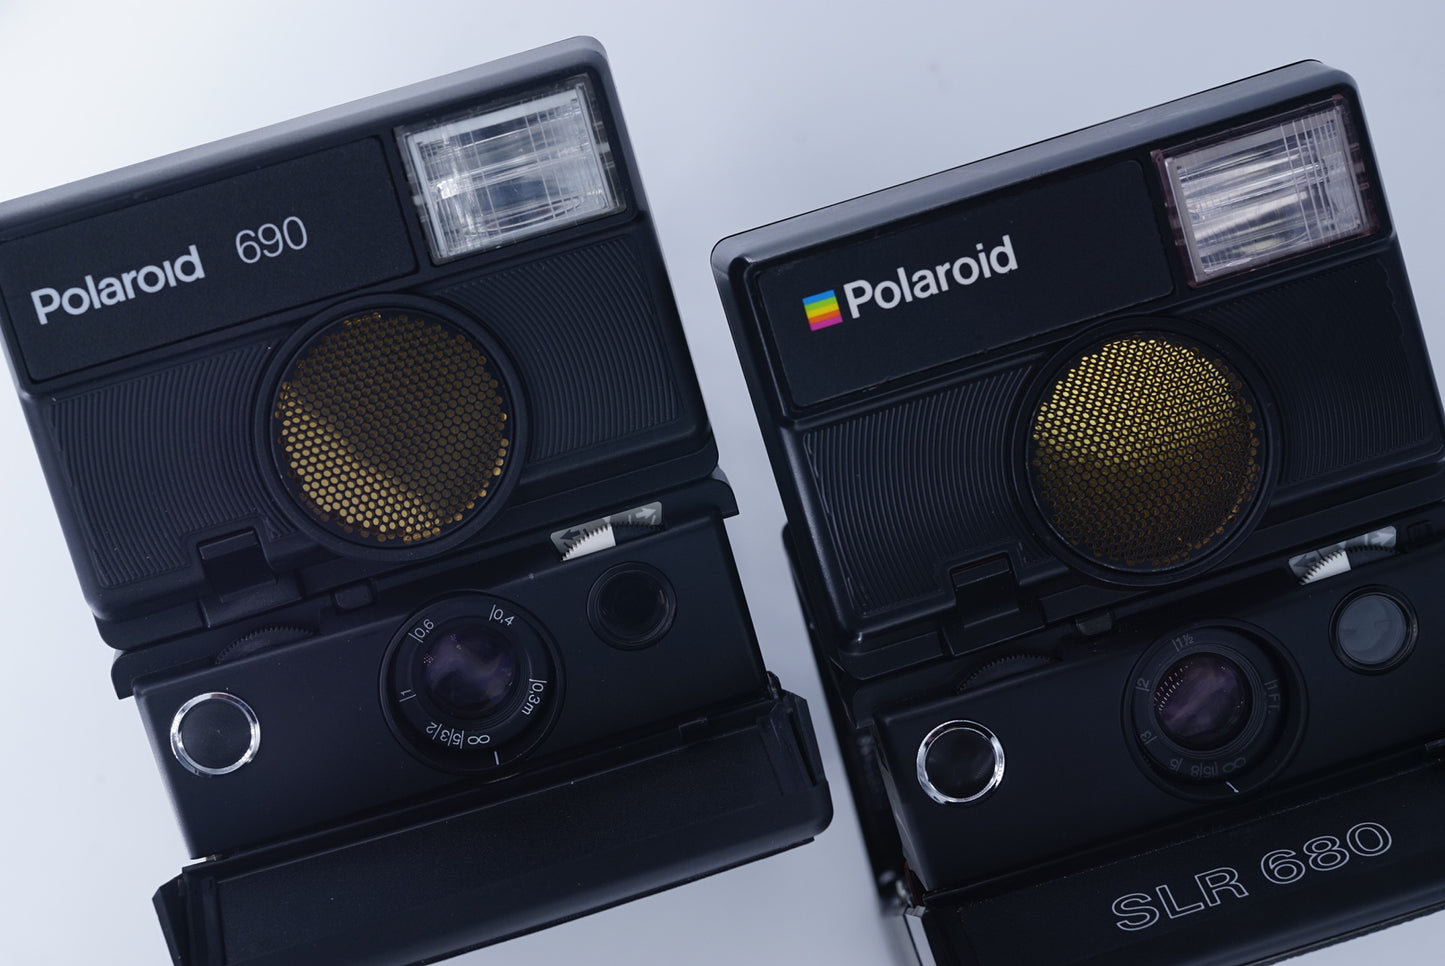 Polaroid SLR680/690 Flash diffused lampshade Transparent parts repair and replacement